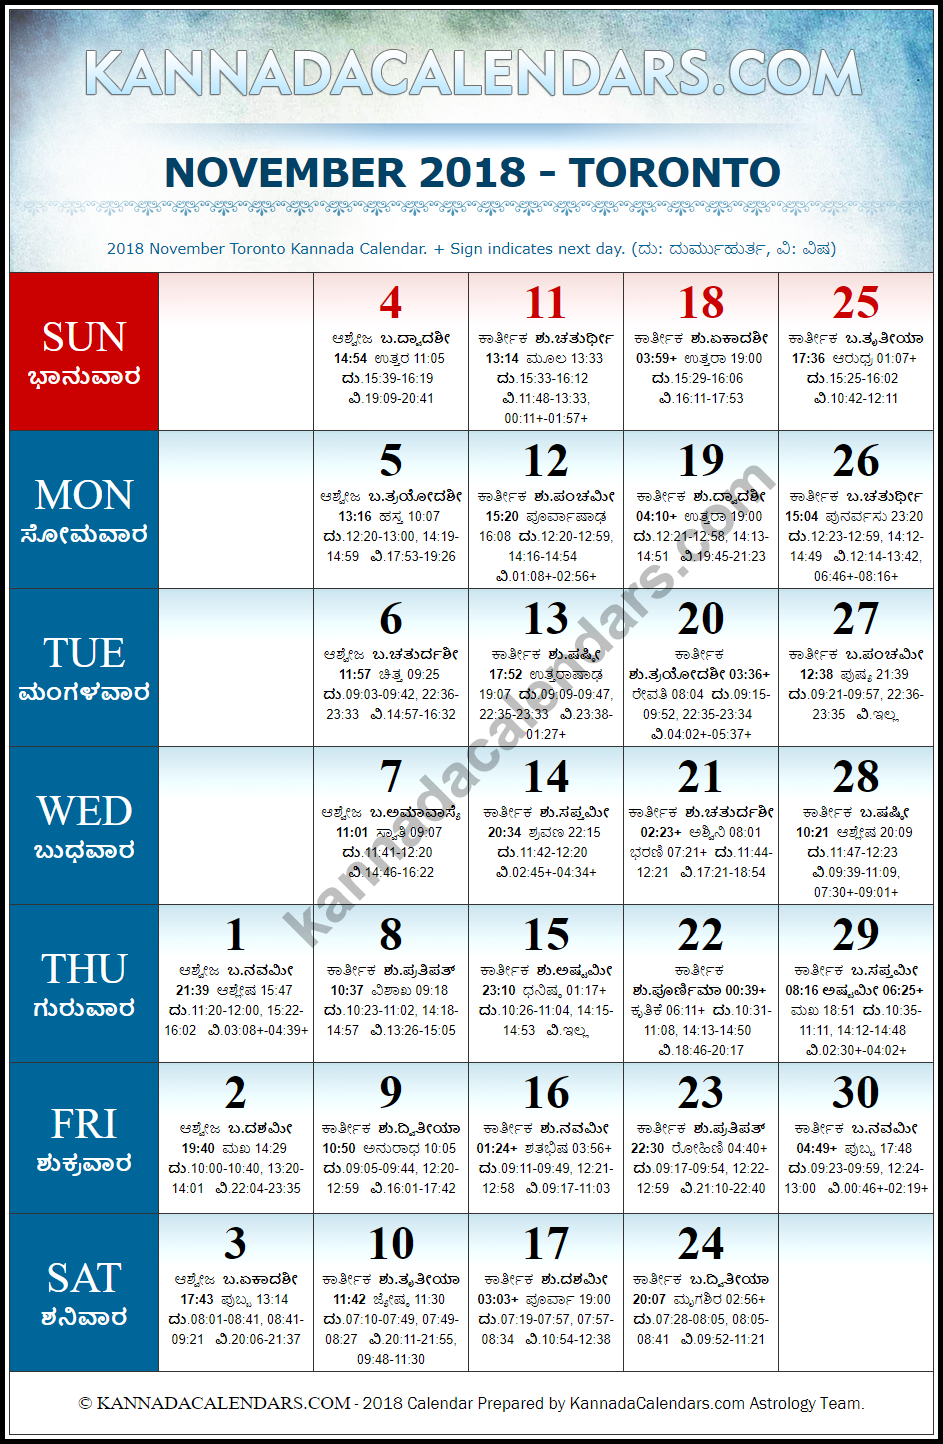 November 2018 Kannada Calendar for Toronto, Canada